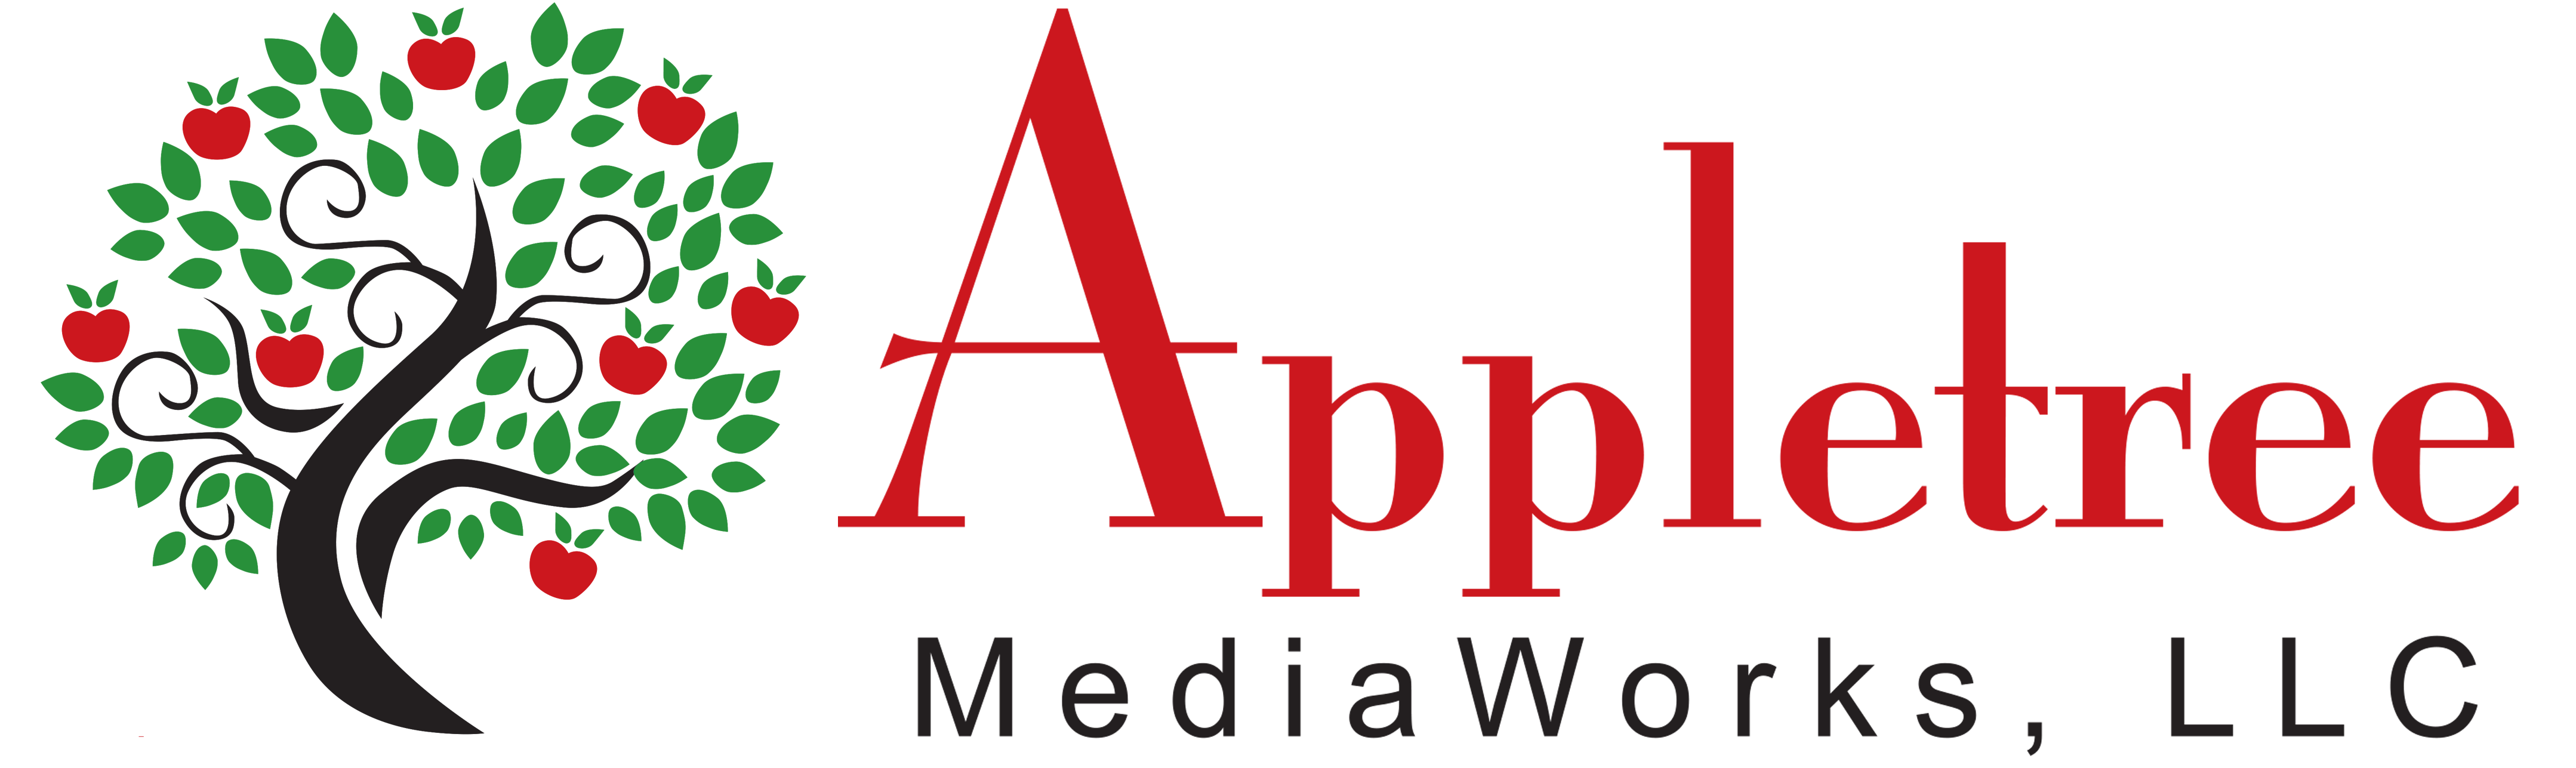 Appletree Mediaworks